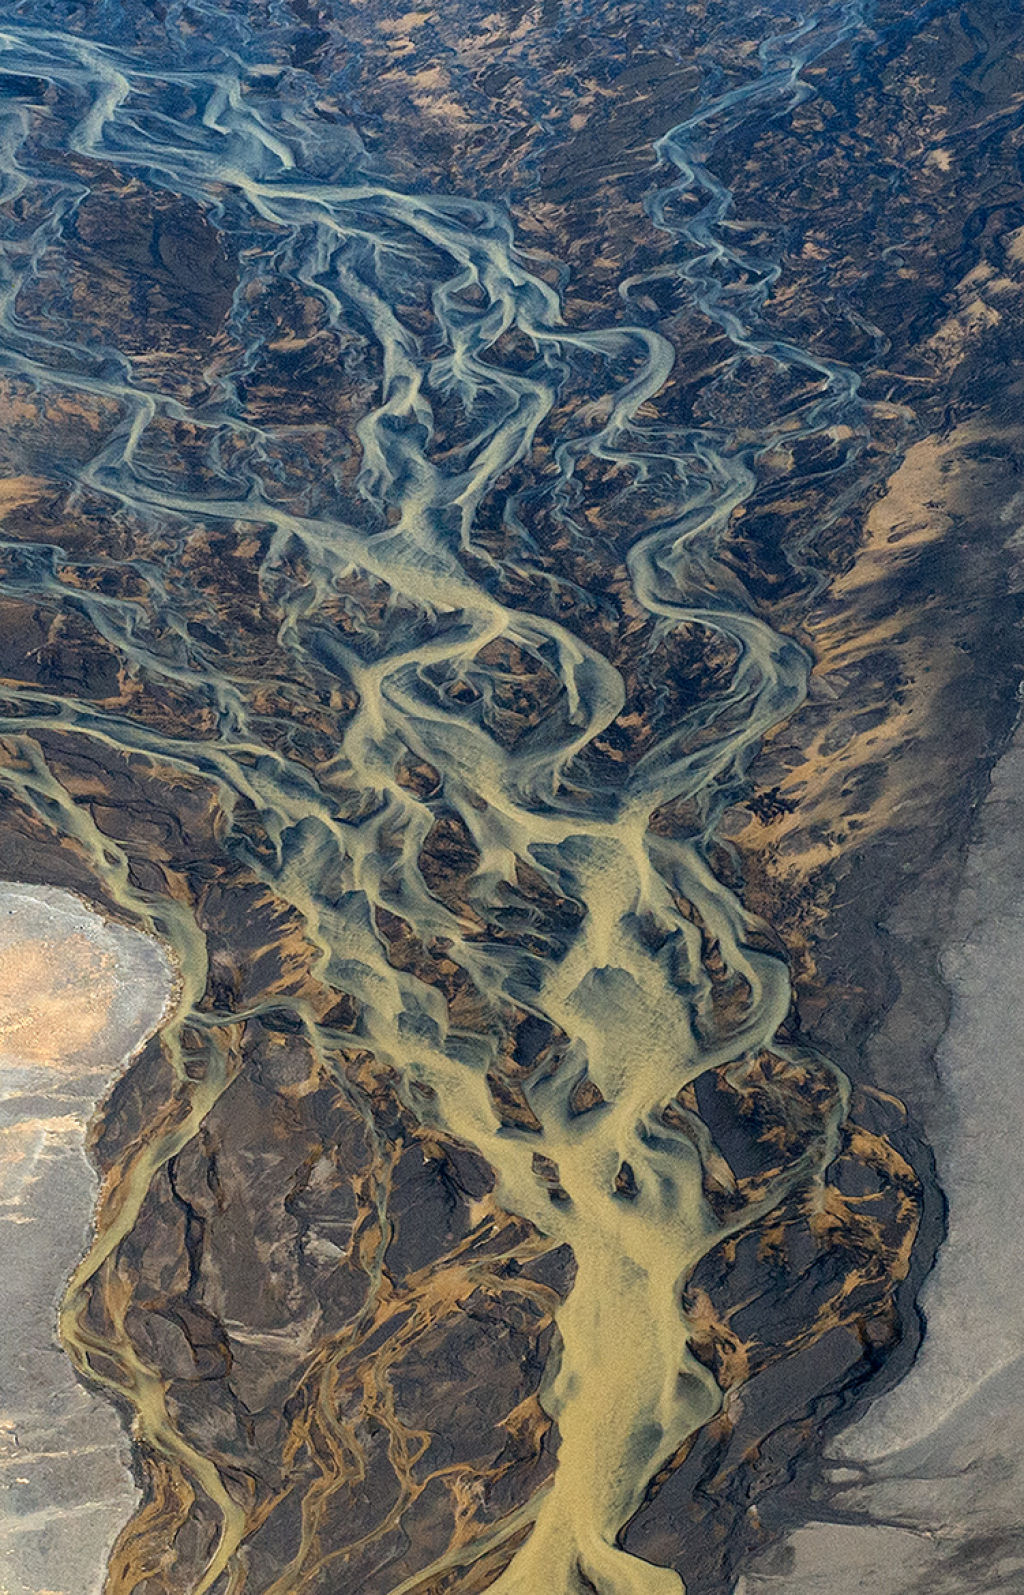 Fotos aéreas espetaculares de rios vulcânicos da Islândia 17